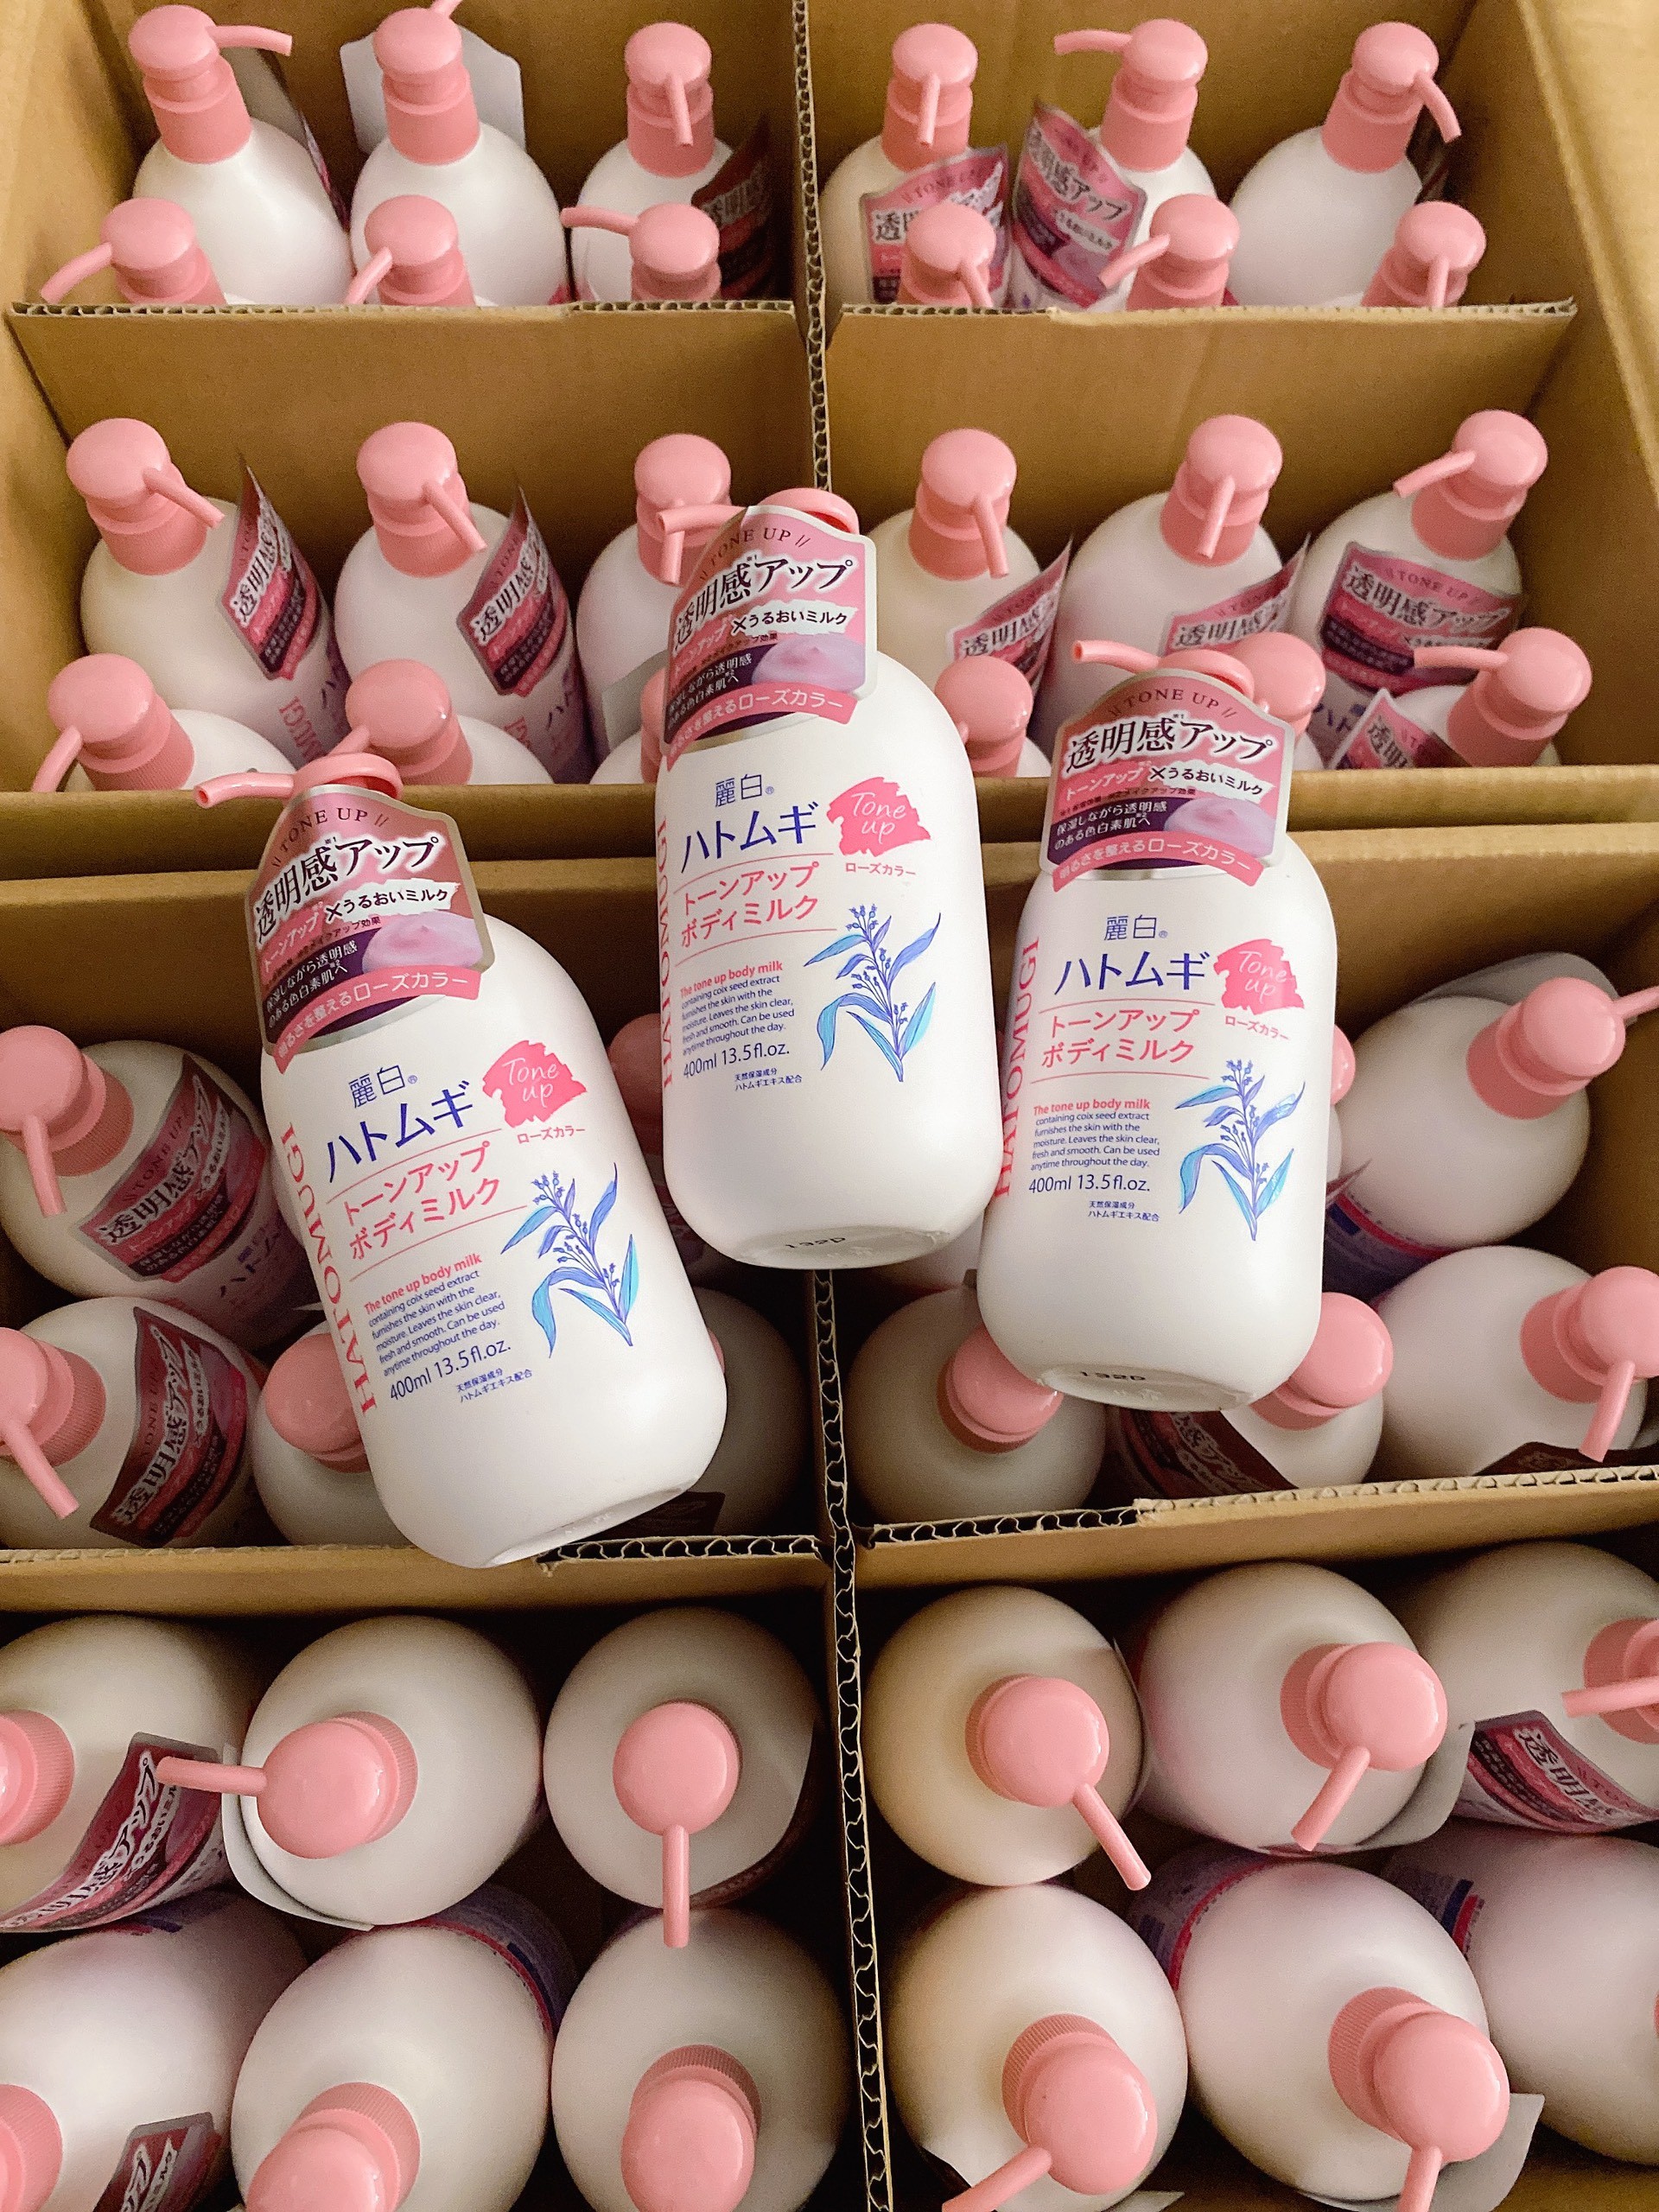 hatomugi the tone up body milk 400ml